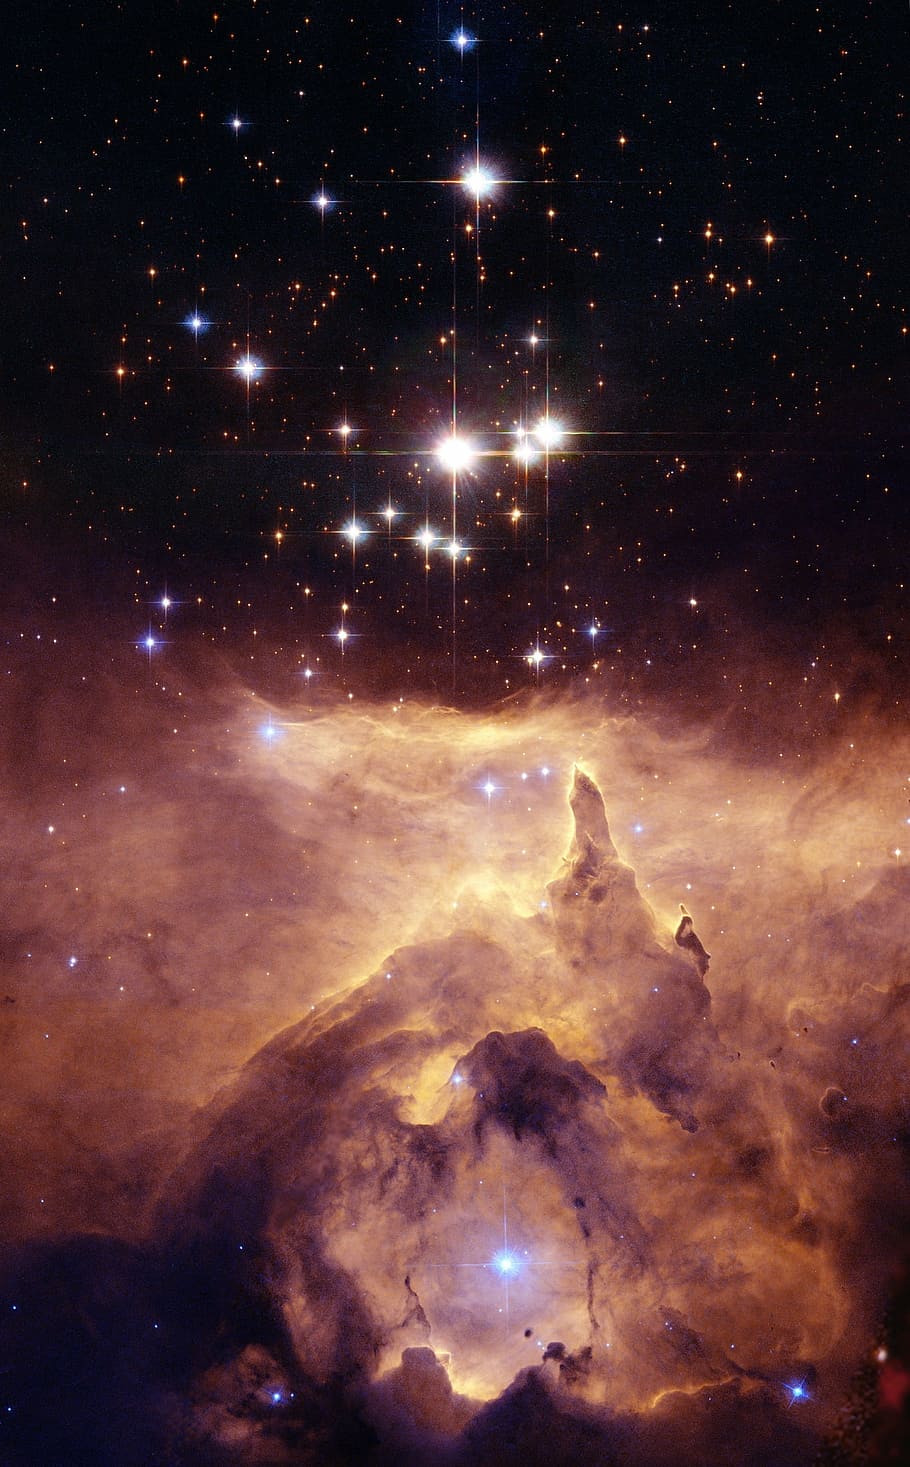 星空, ロブスター星雲, NGC 6357, 拡散星雲, 宇宙, 天体, 星, 光, 空, NASA